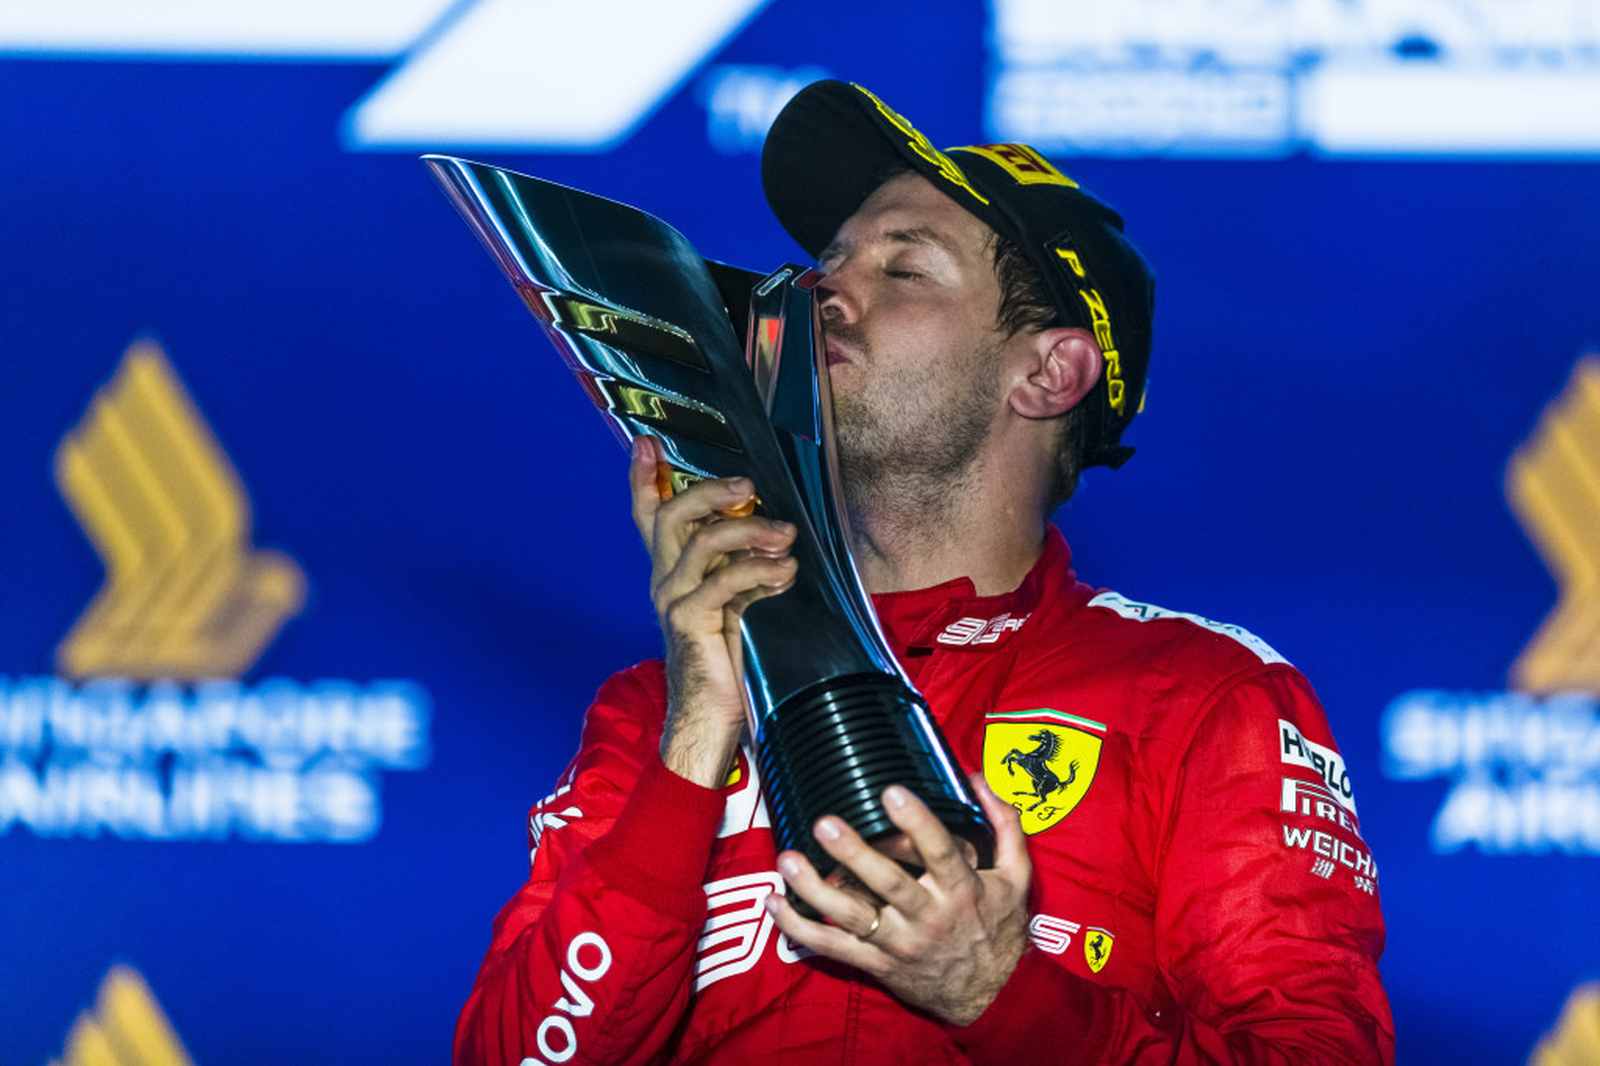 Sebastian Vettel - quatro títulos (2010, 2011, 2012 e 2013)